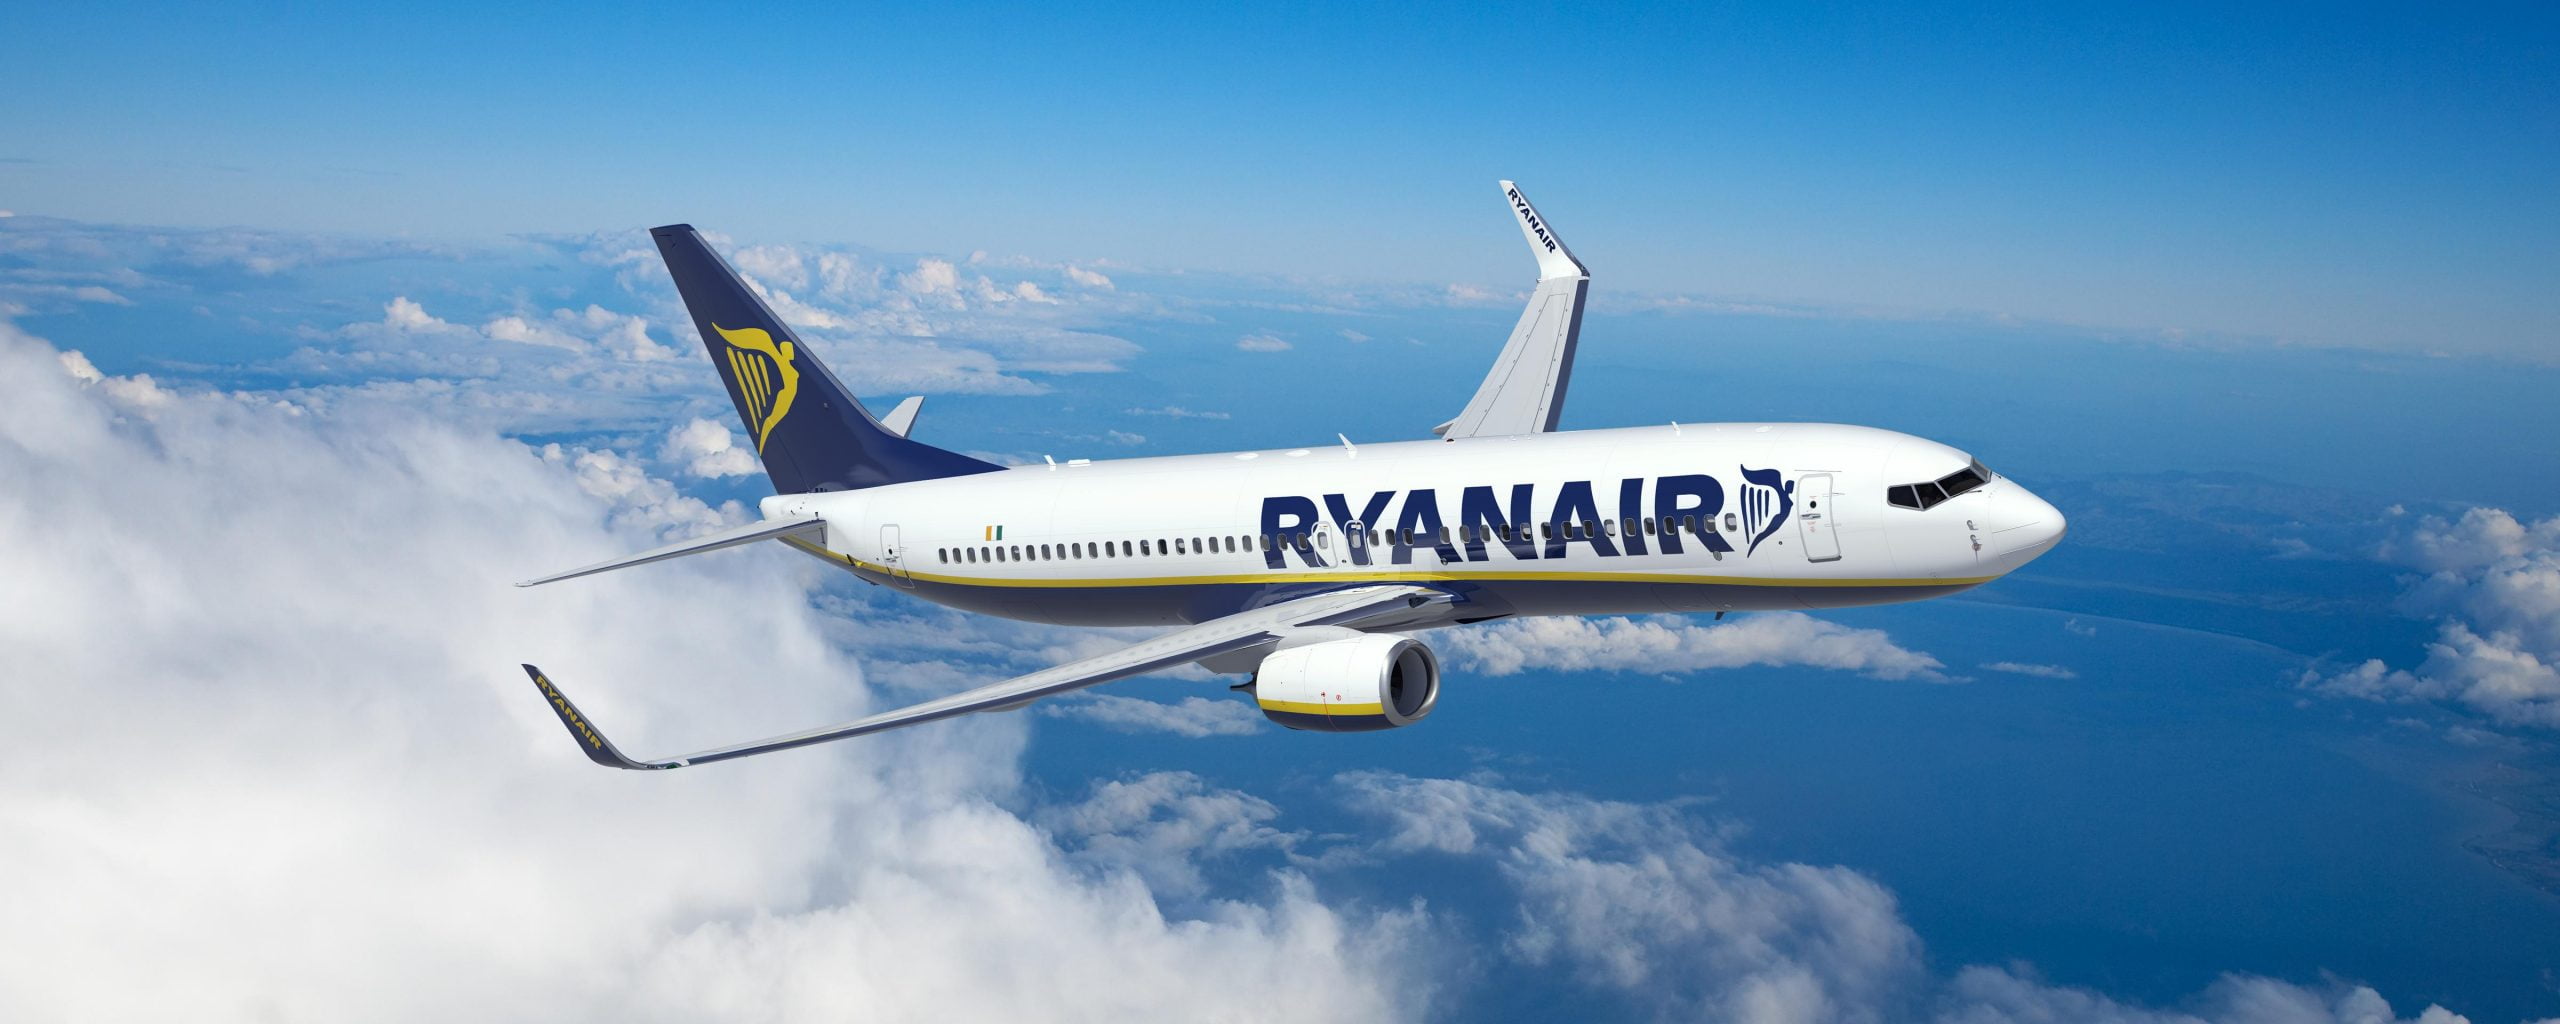 Авиокомпания Ryanair